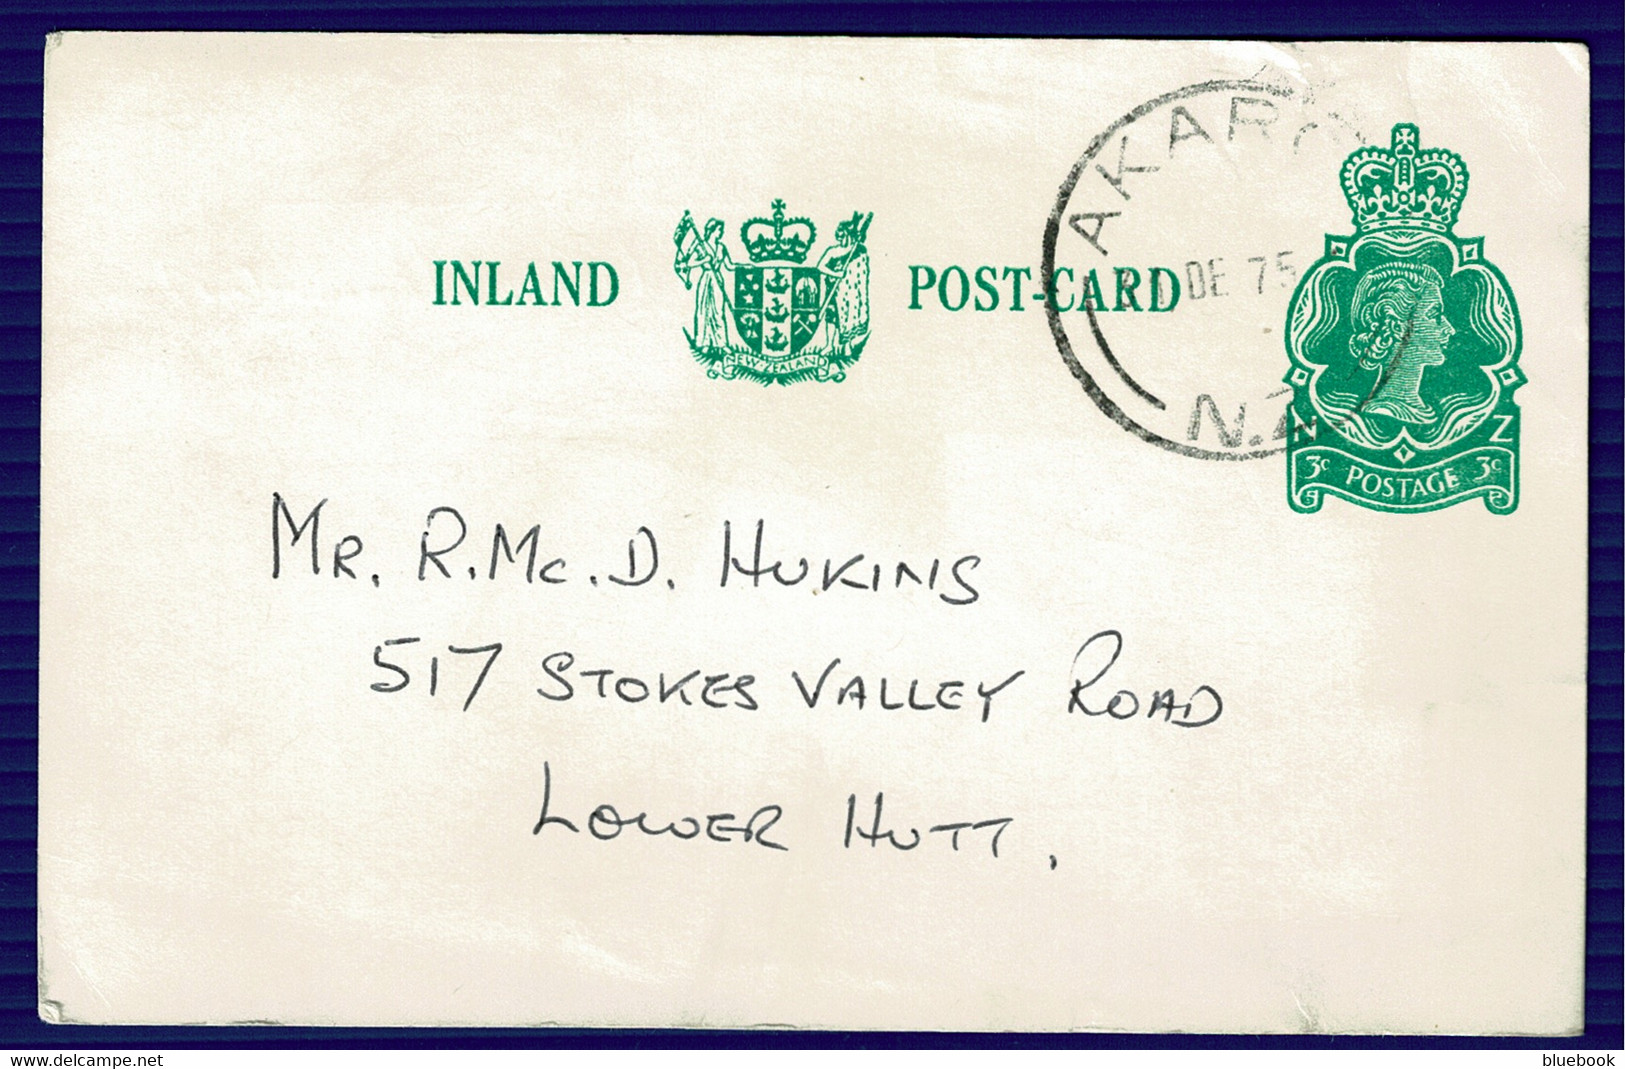 Ref 1566 - 1975 New Zealand 3c Postal Stationery Card - Akaroa Postmark To Lower Hutt - Briefe U. Dokumente